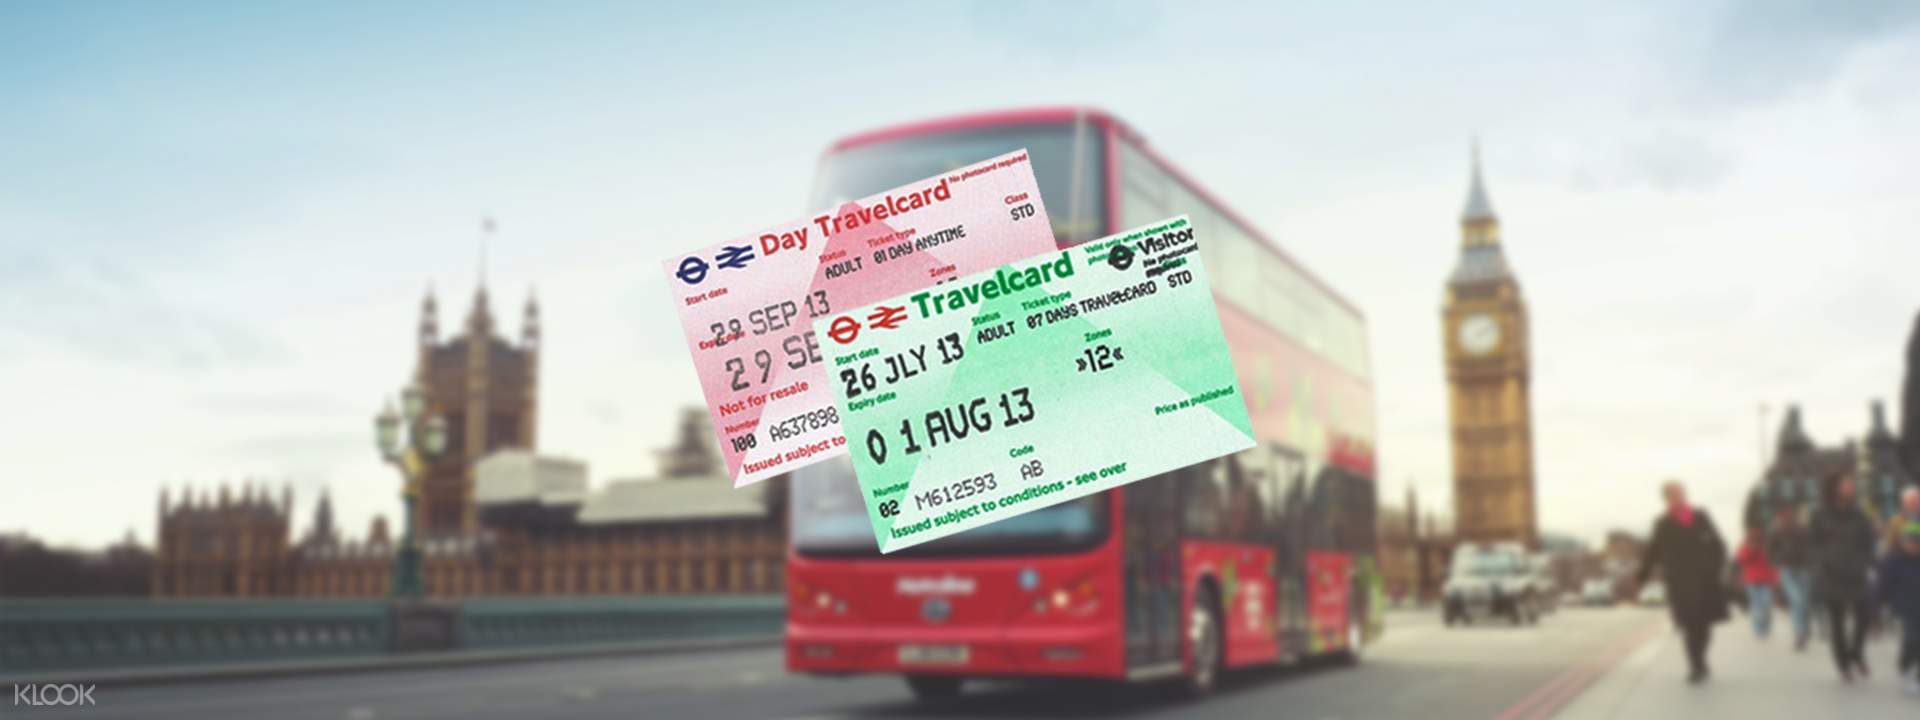 train travel card to london